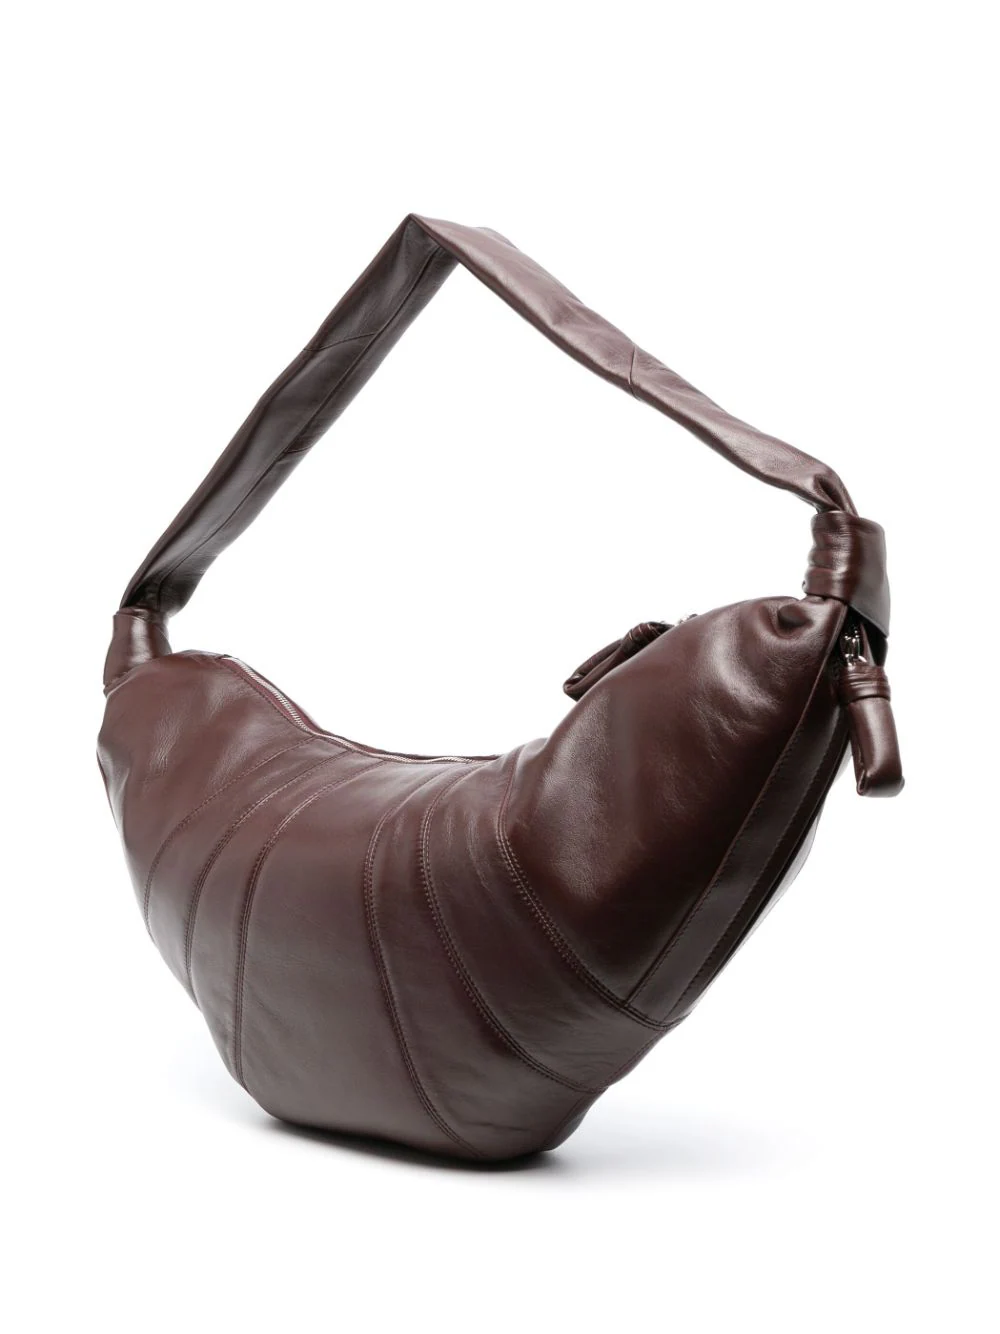 Hobo Mini Trunk Bag - Marni - Leather - Brown Pony-style calfskin